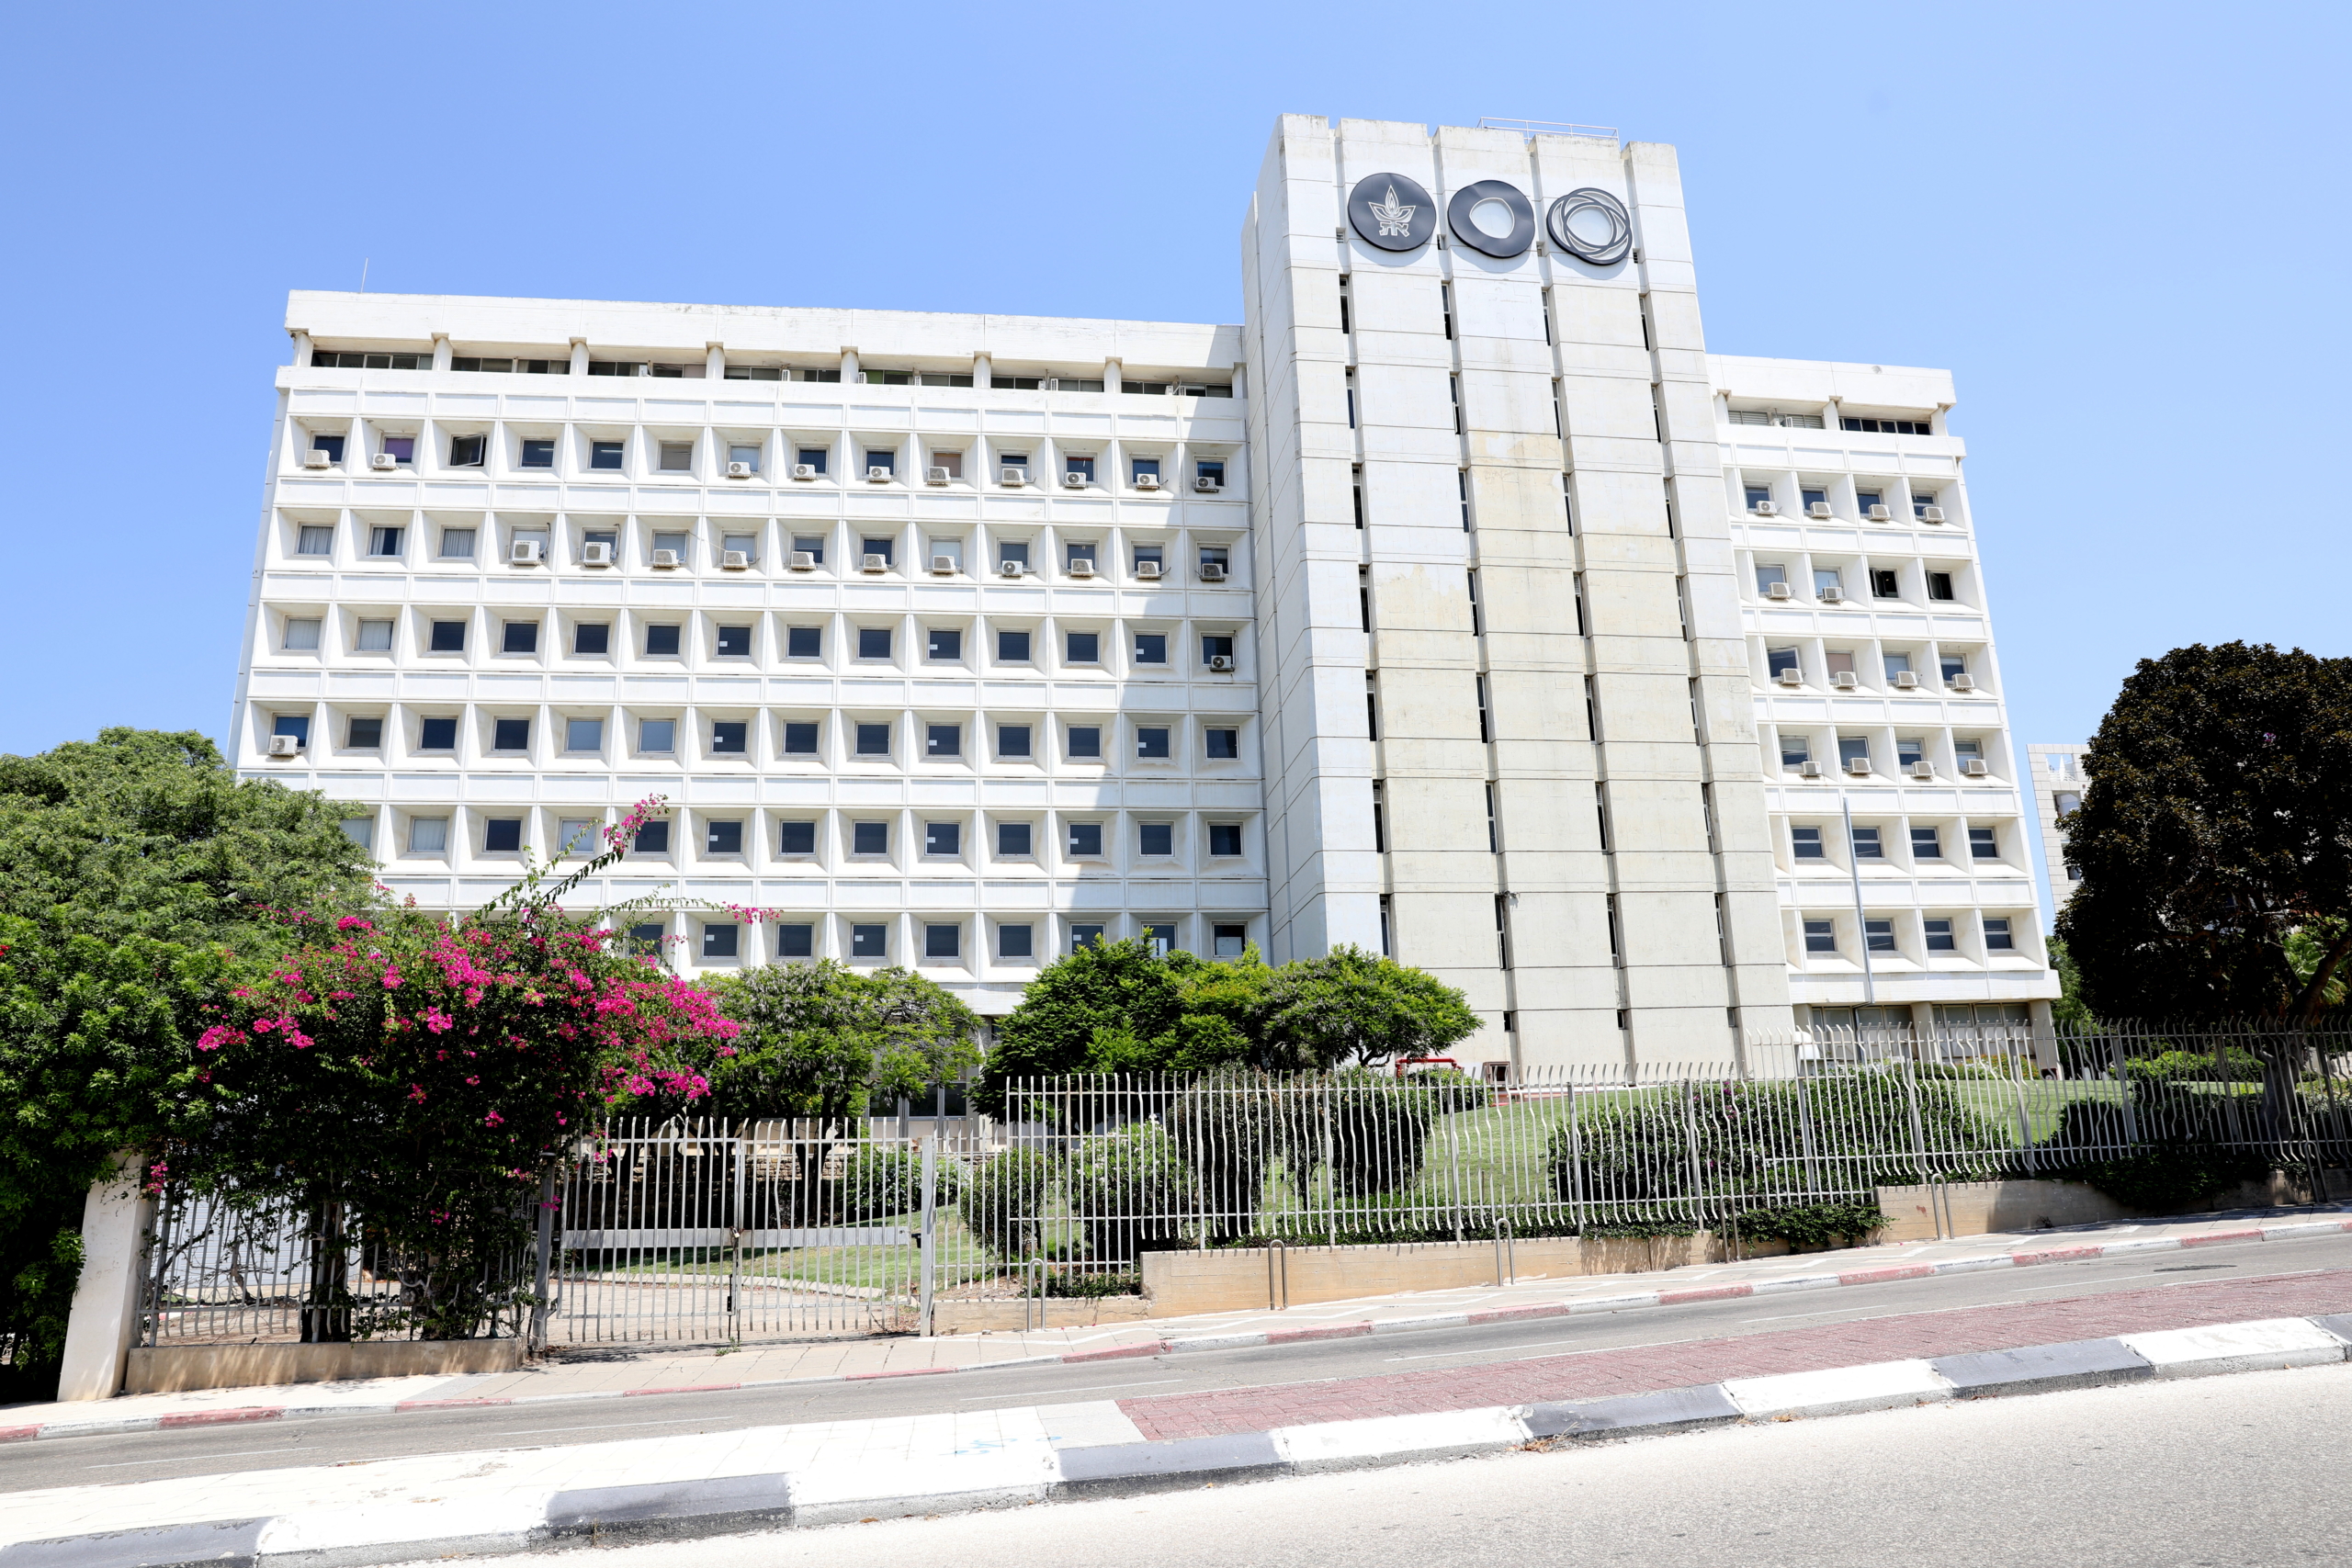 Tel Aviv University Medical Simulation Training Center Grant Featured in The Jerusalem Post